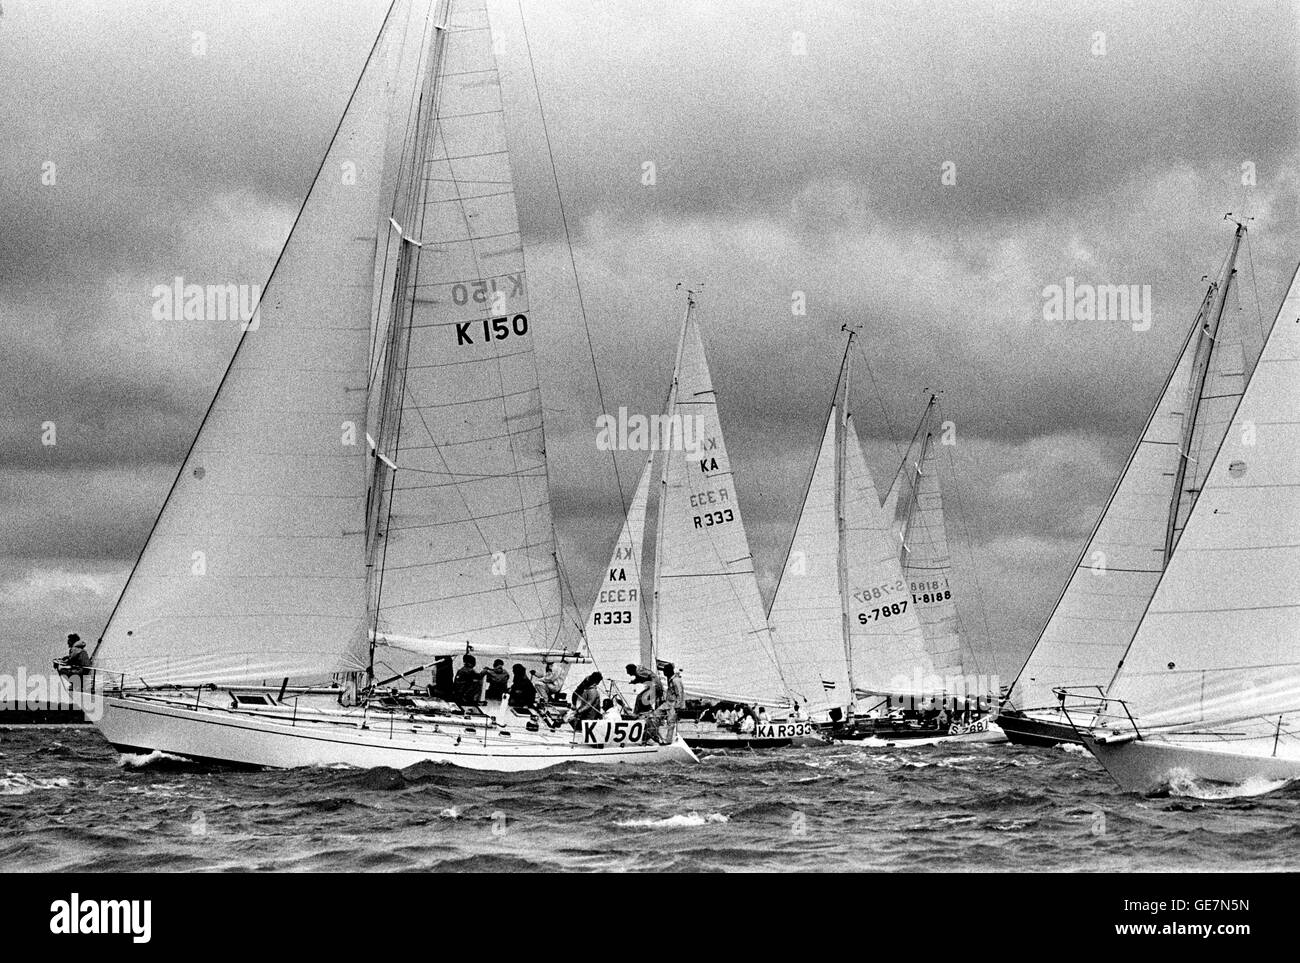 AJAXNETPHOTO. AUGUST, 1979. SOLENT, ENGLAND. - ADMIRAL'S CUP - START 2ND INSHORE RACE. (L-R) NORYEMA (BR), POLICE CAR (AUS), CAMPSA (SP), VANINA (IT).  PHOTO:JONATHAN EASTLAND/AJAX REF:()YAR ADMIRALS CUP FLEET 2 1979 Stock Photo